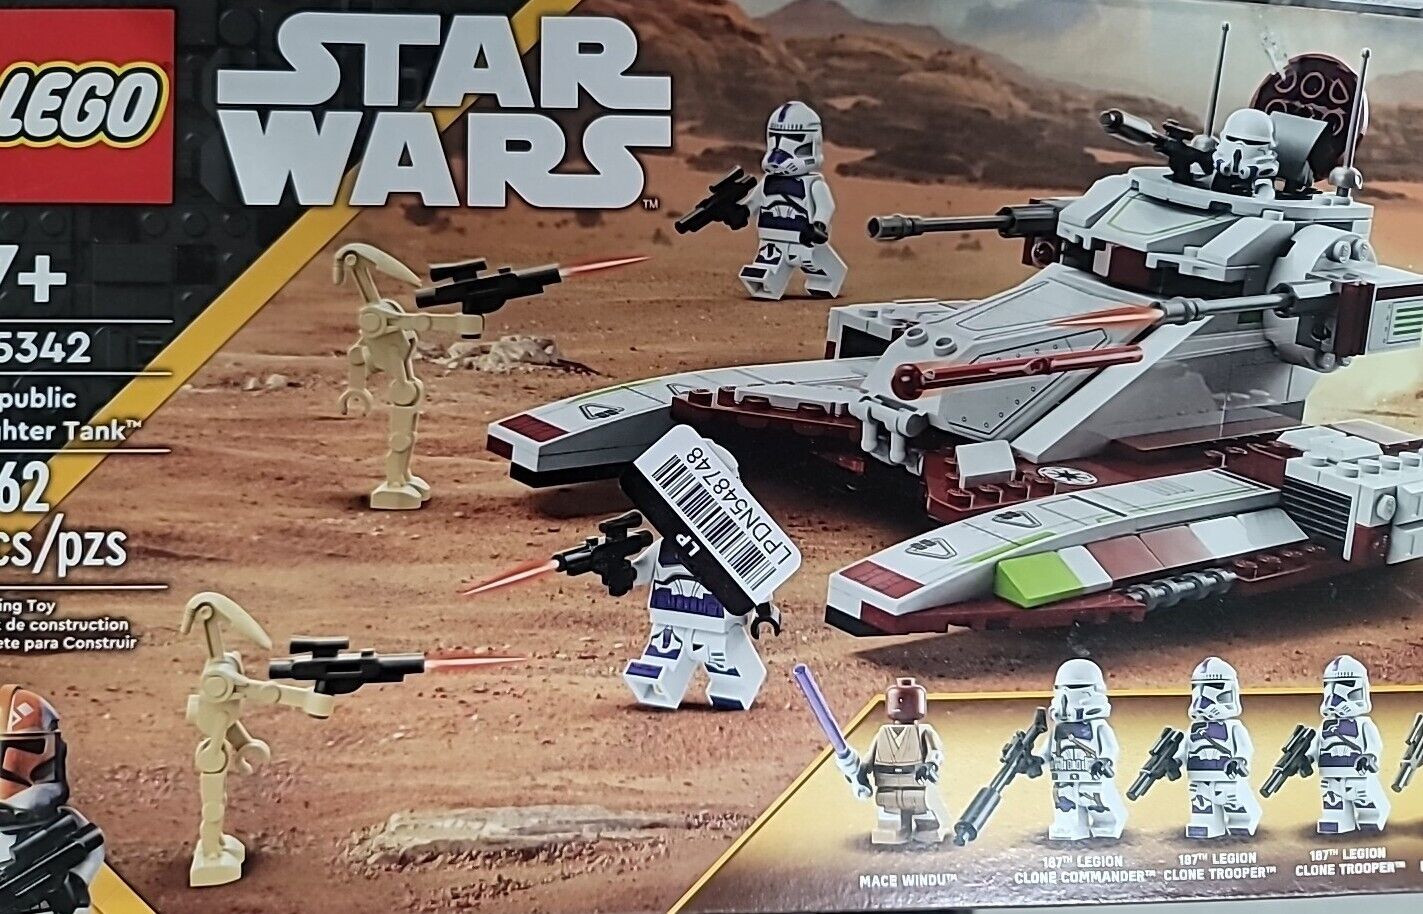 Lego Star Wars: Republic Fighter Tank (75342) NEW In Box Sealed (Damaged Box)